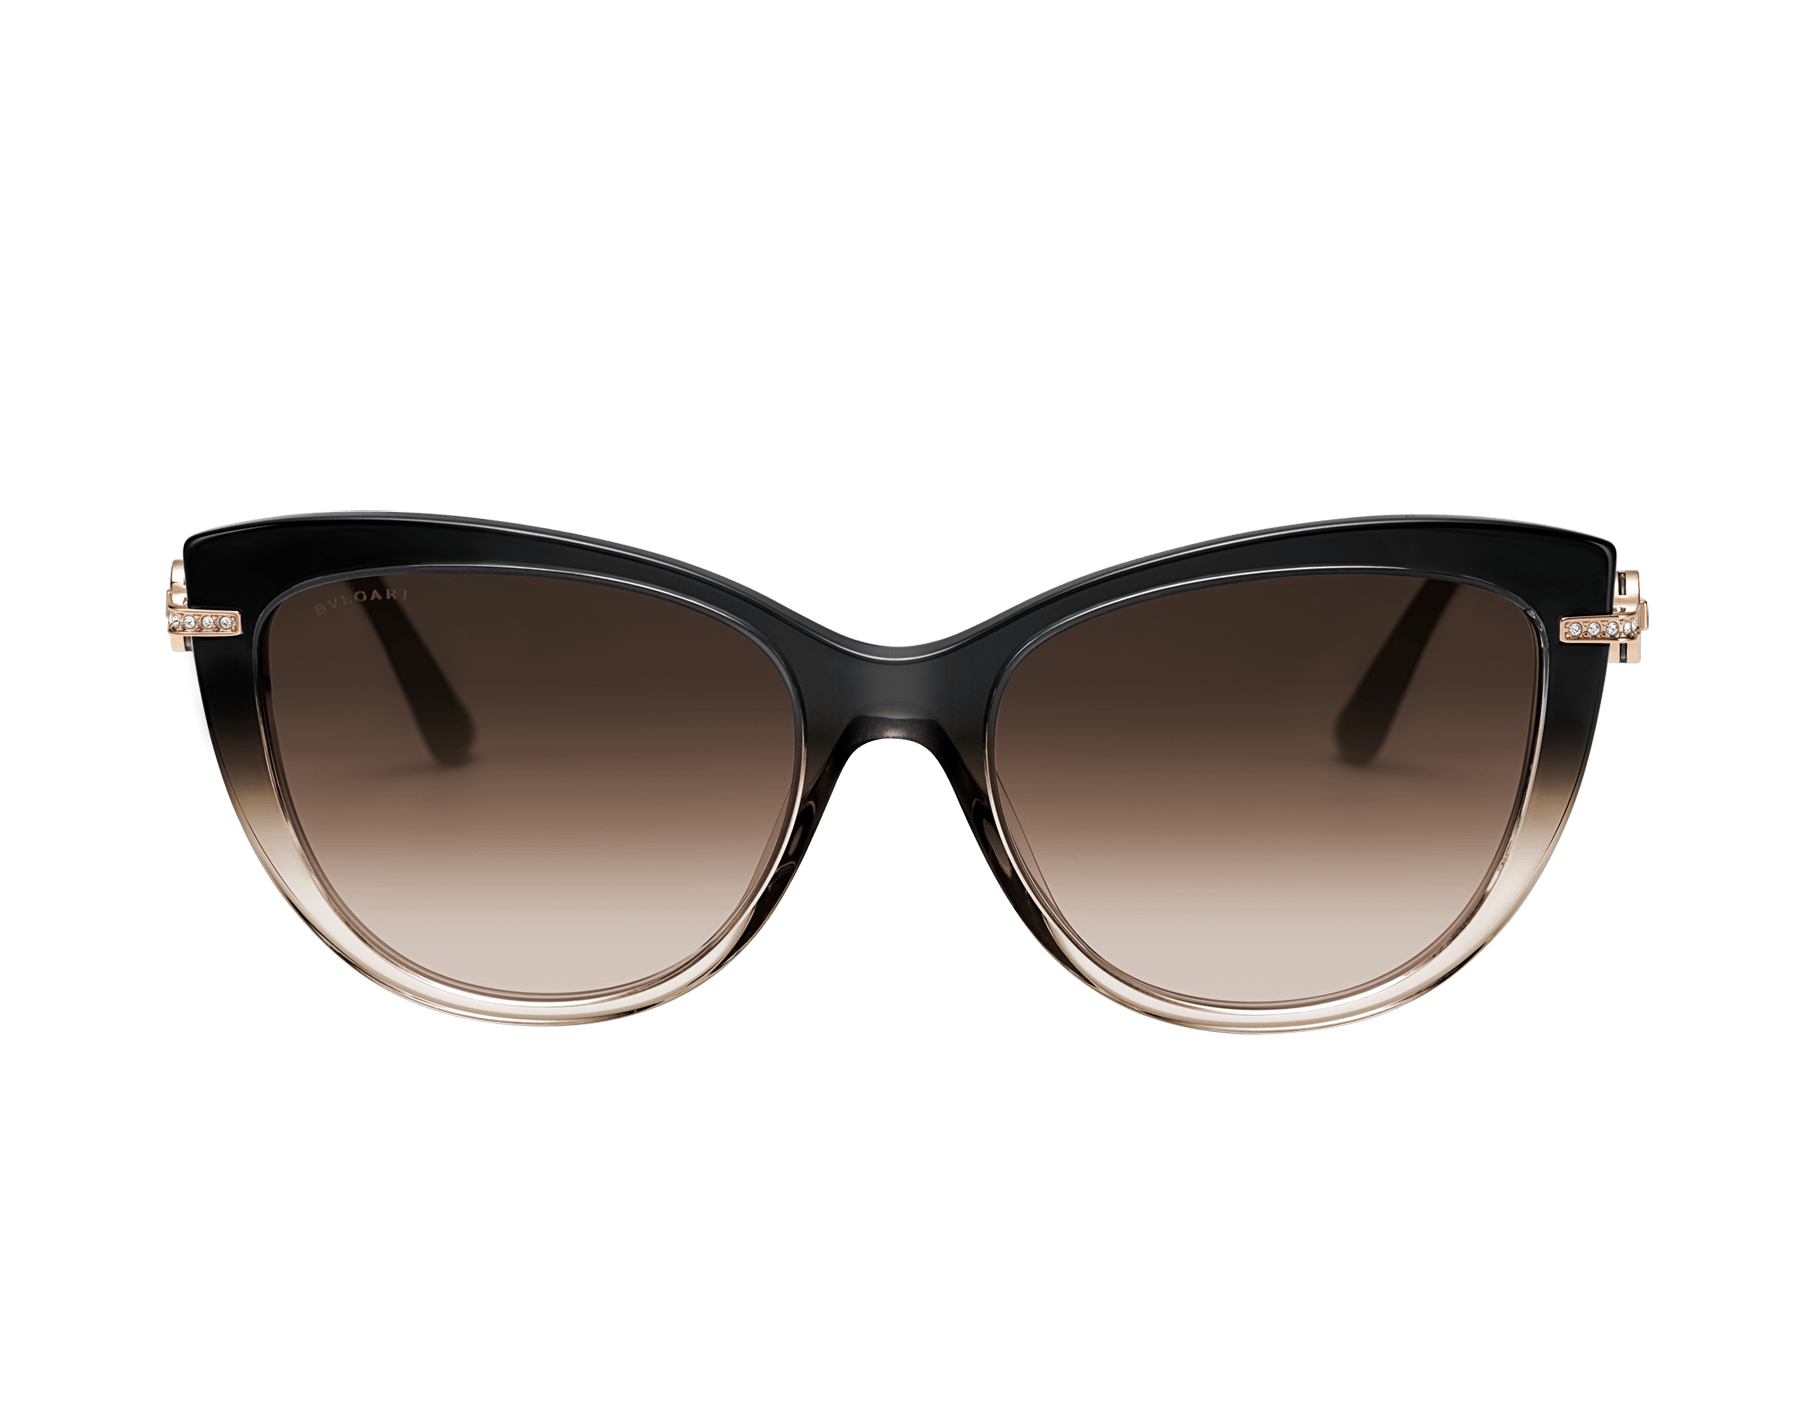 bvlgari sunglasses shop online